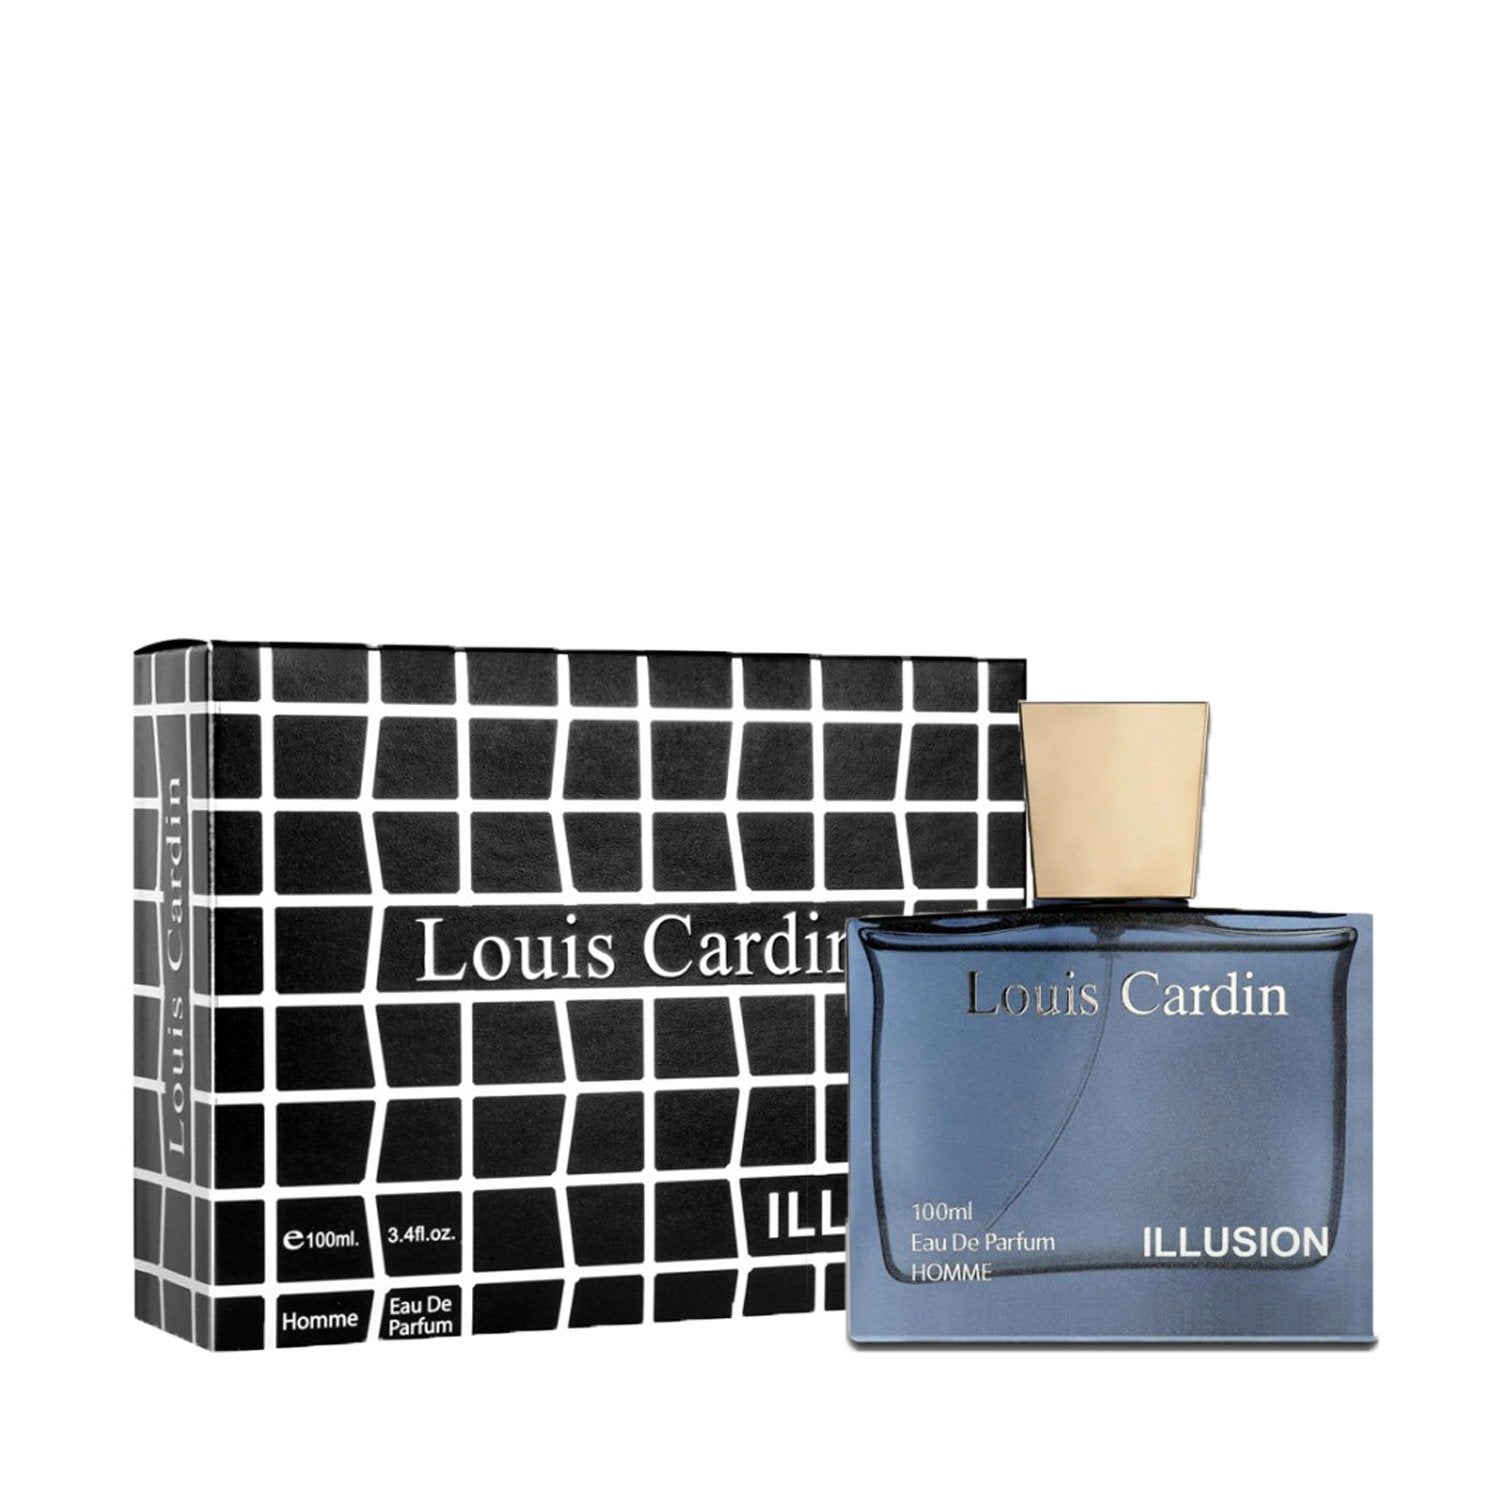 Louis Cardin Credible Series 